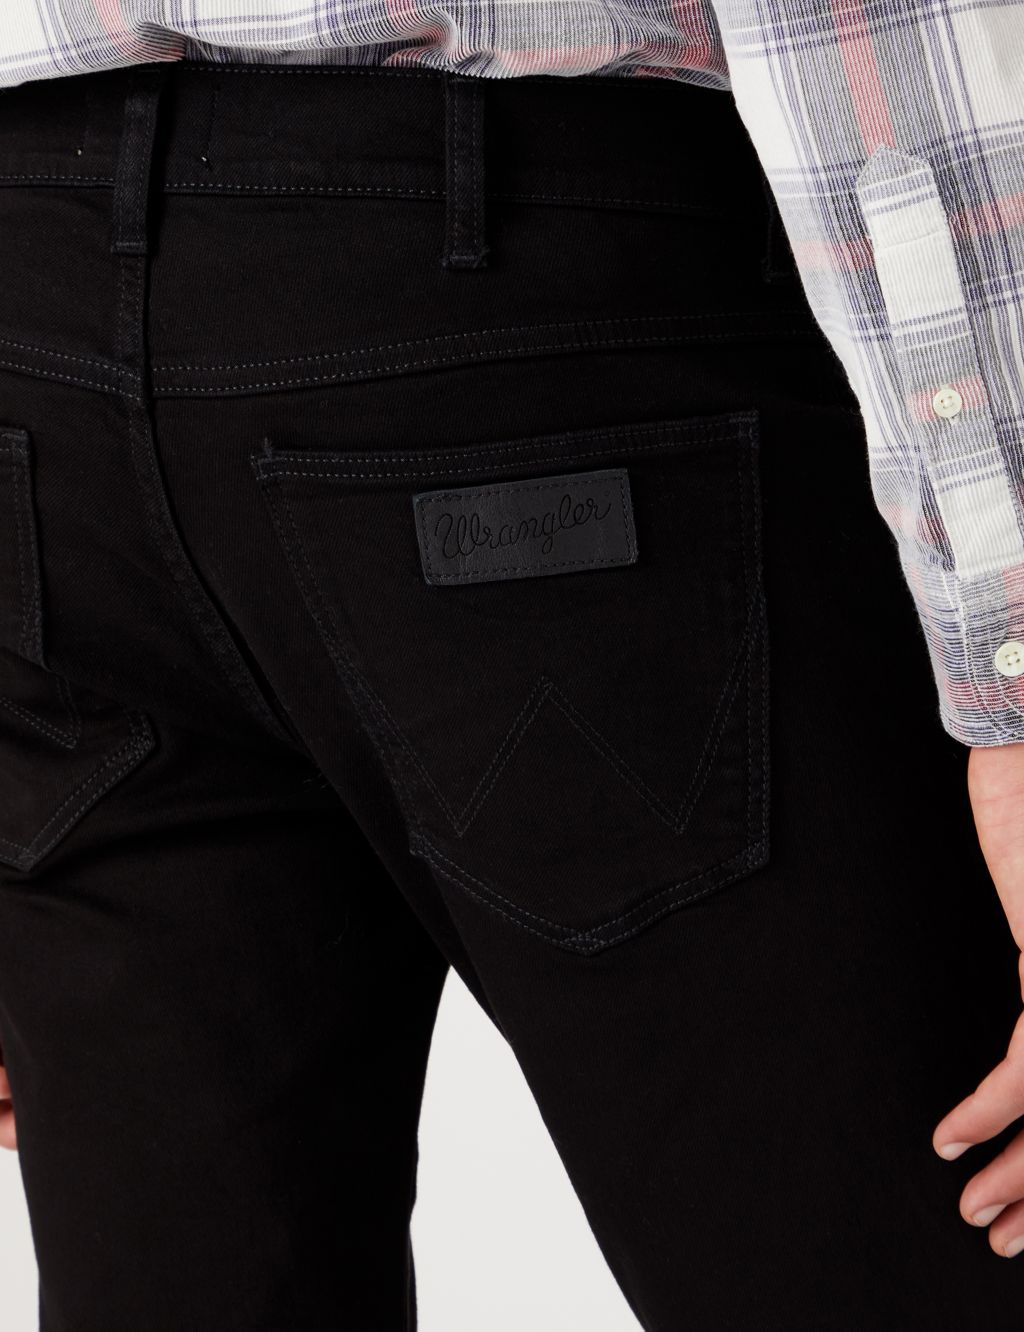 Larston Tapered Slim Fit 5 Pocket Jeans image 4